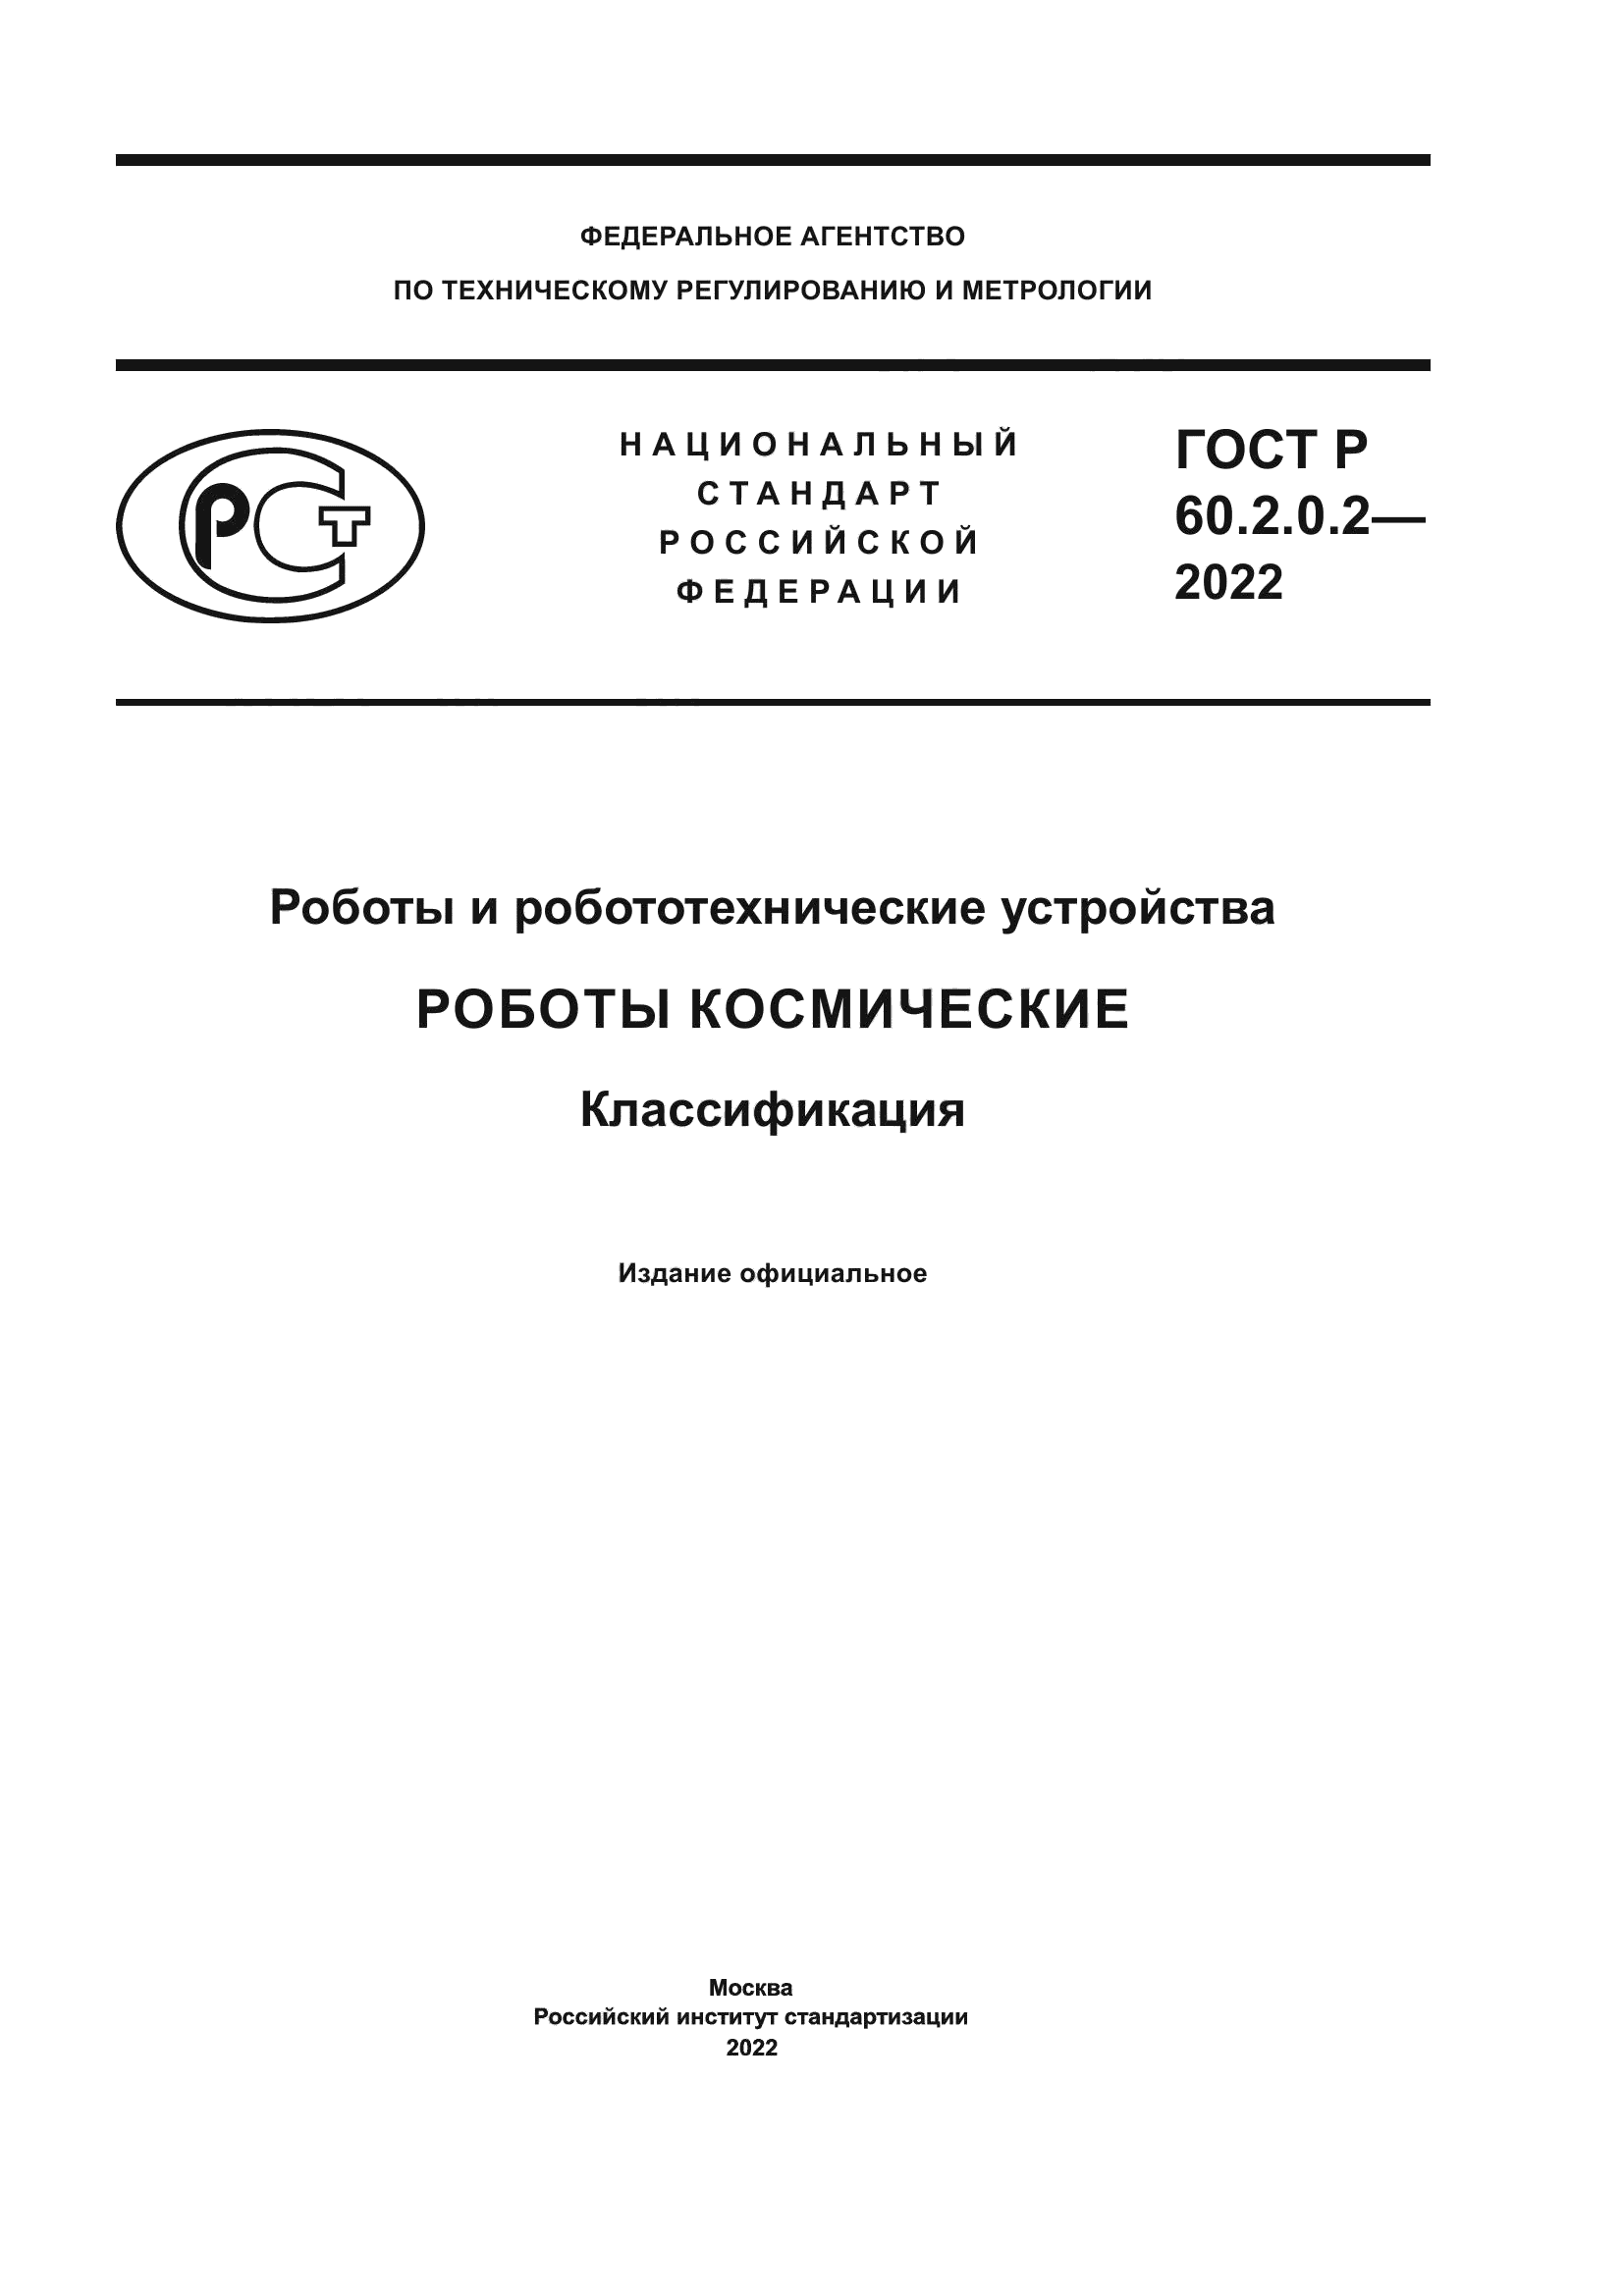 ГОСТ Р 60.2.0.2-2022